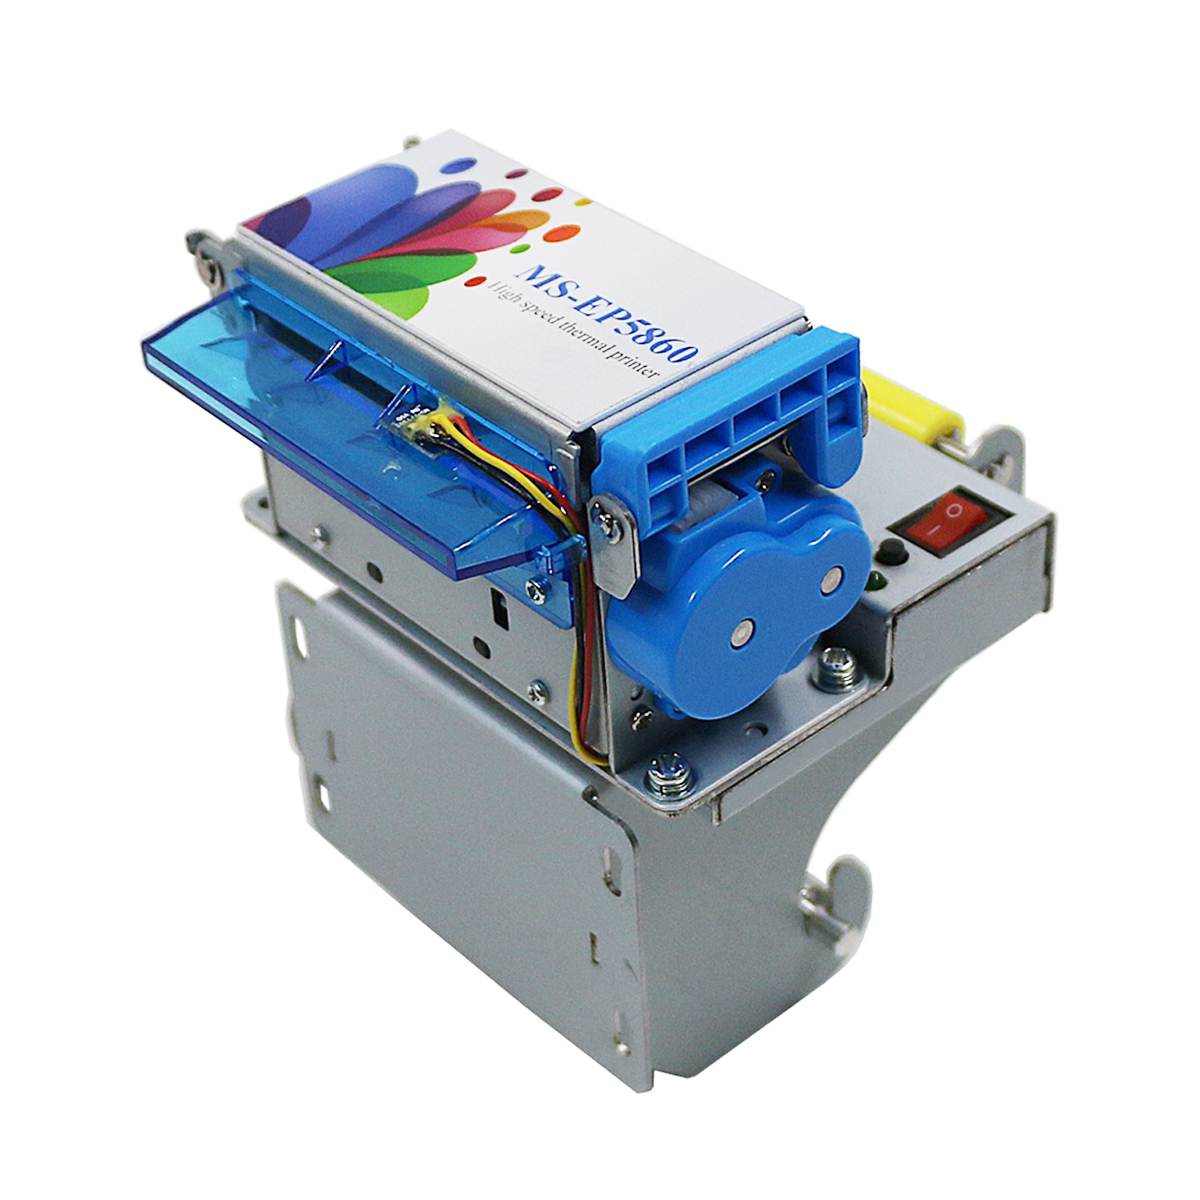 vending machine square 58mm Thermal Printer for mac